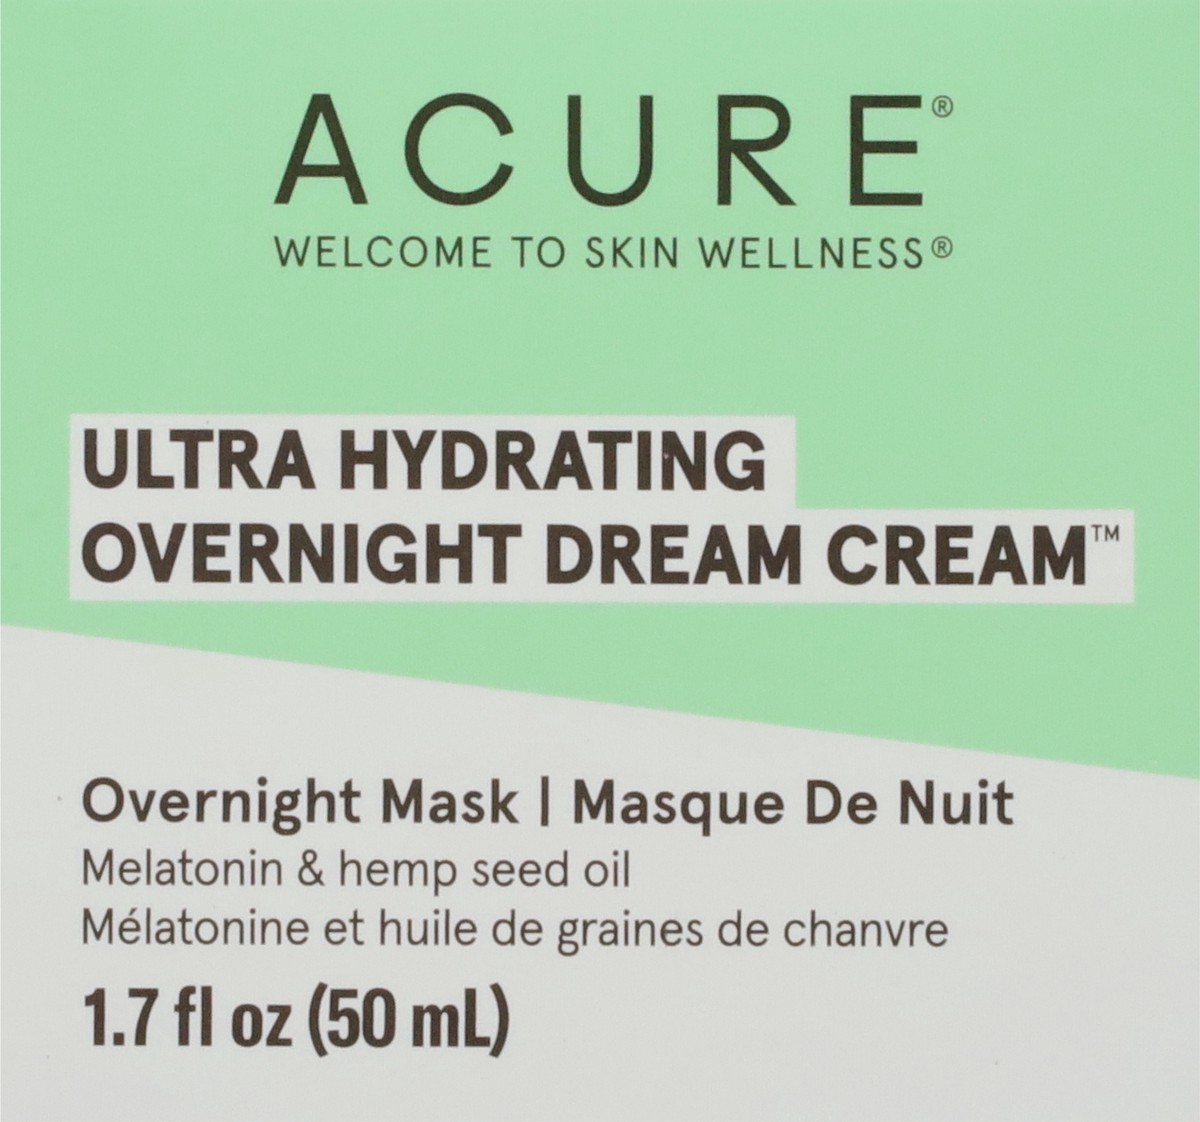 slide 6 of 9, Acure Ultra Hydrating Overnight Dream Cream, 1.7 fl oz